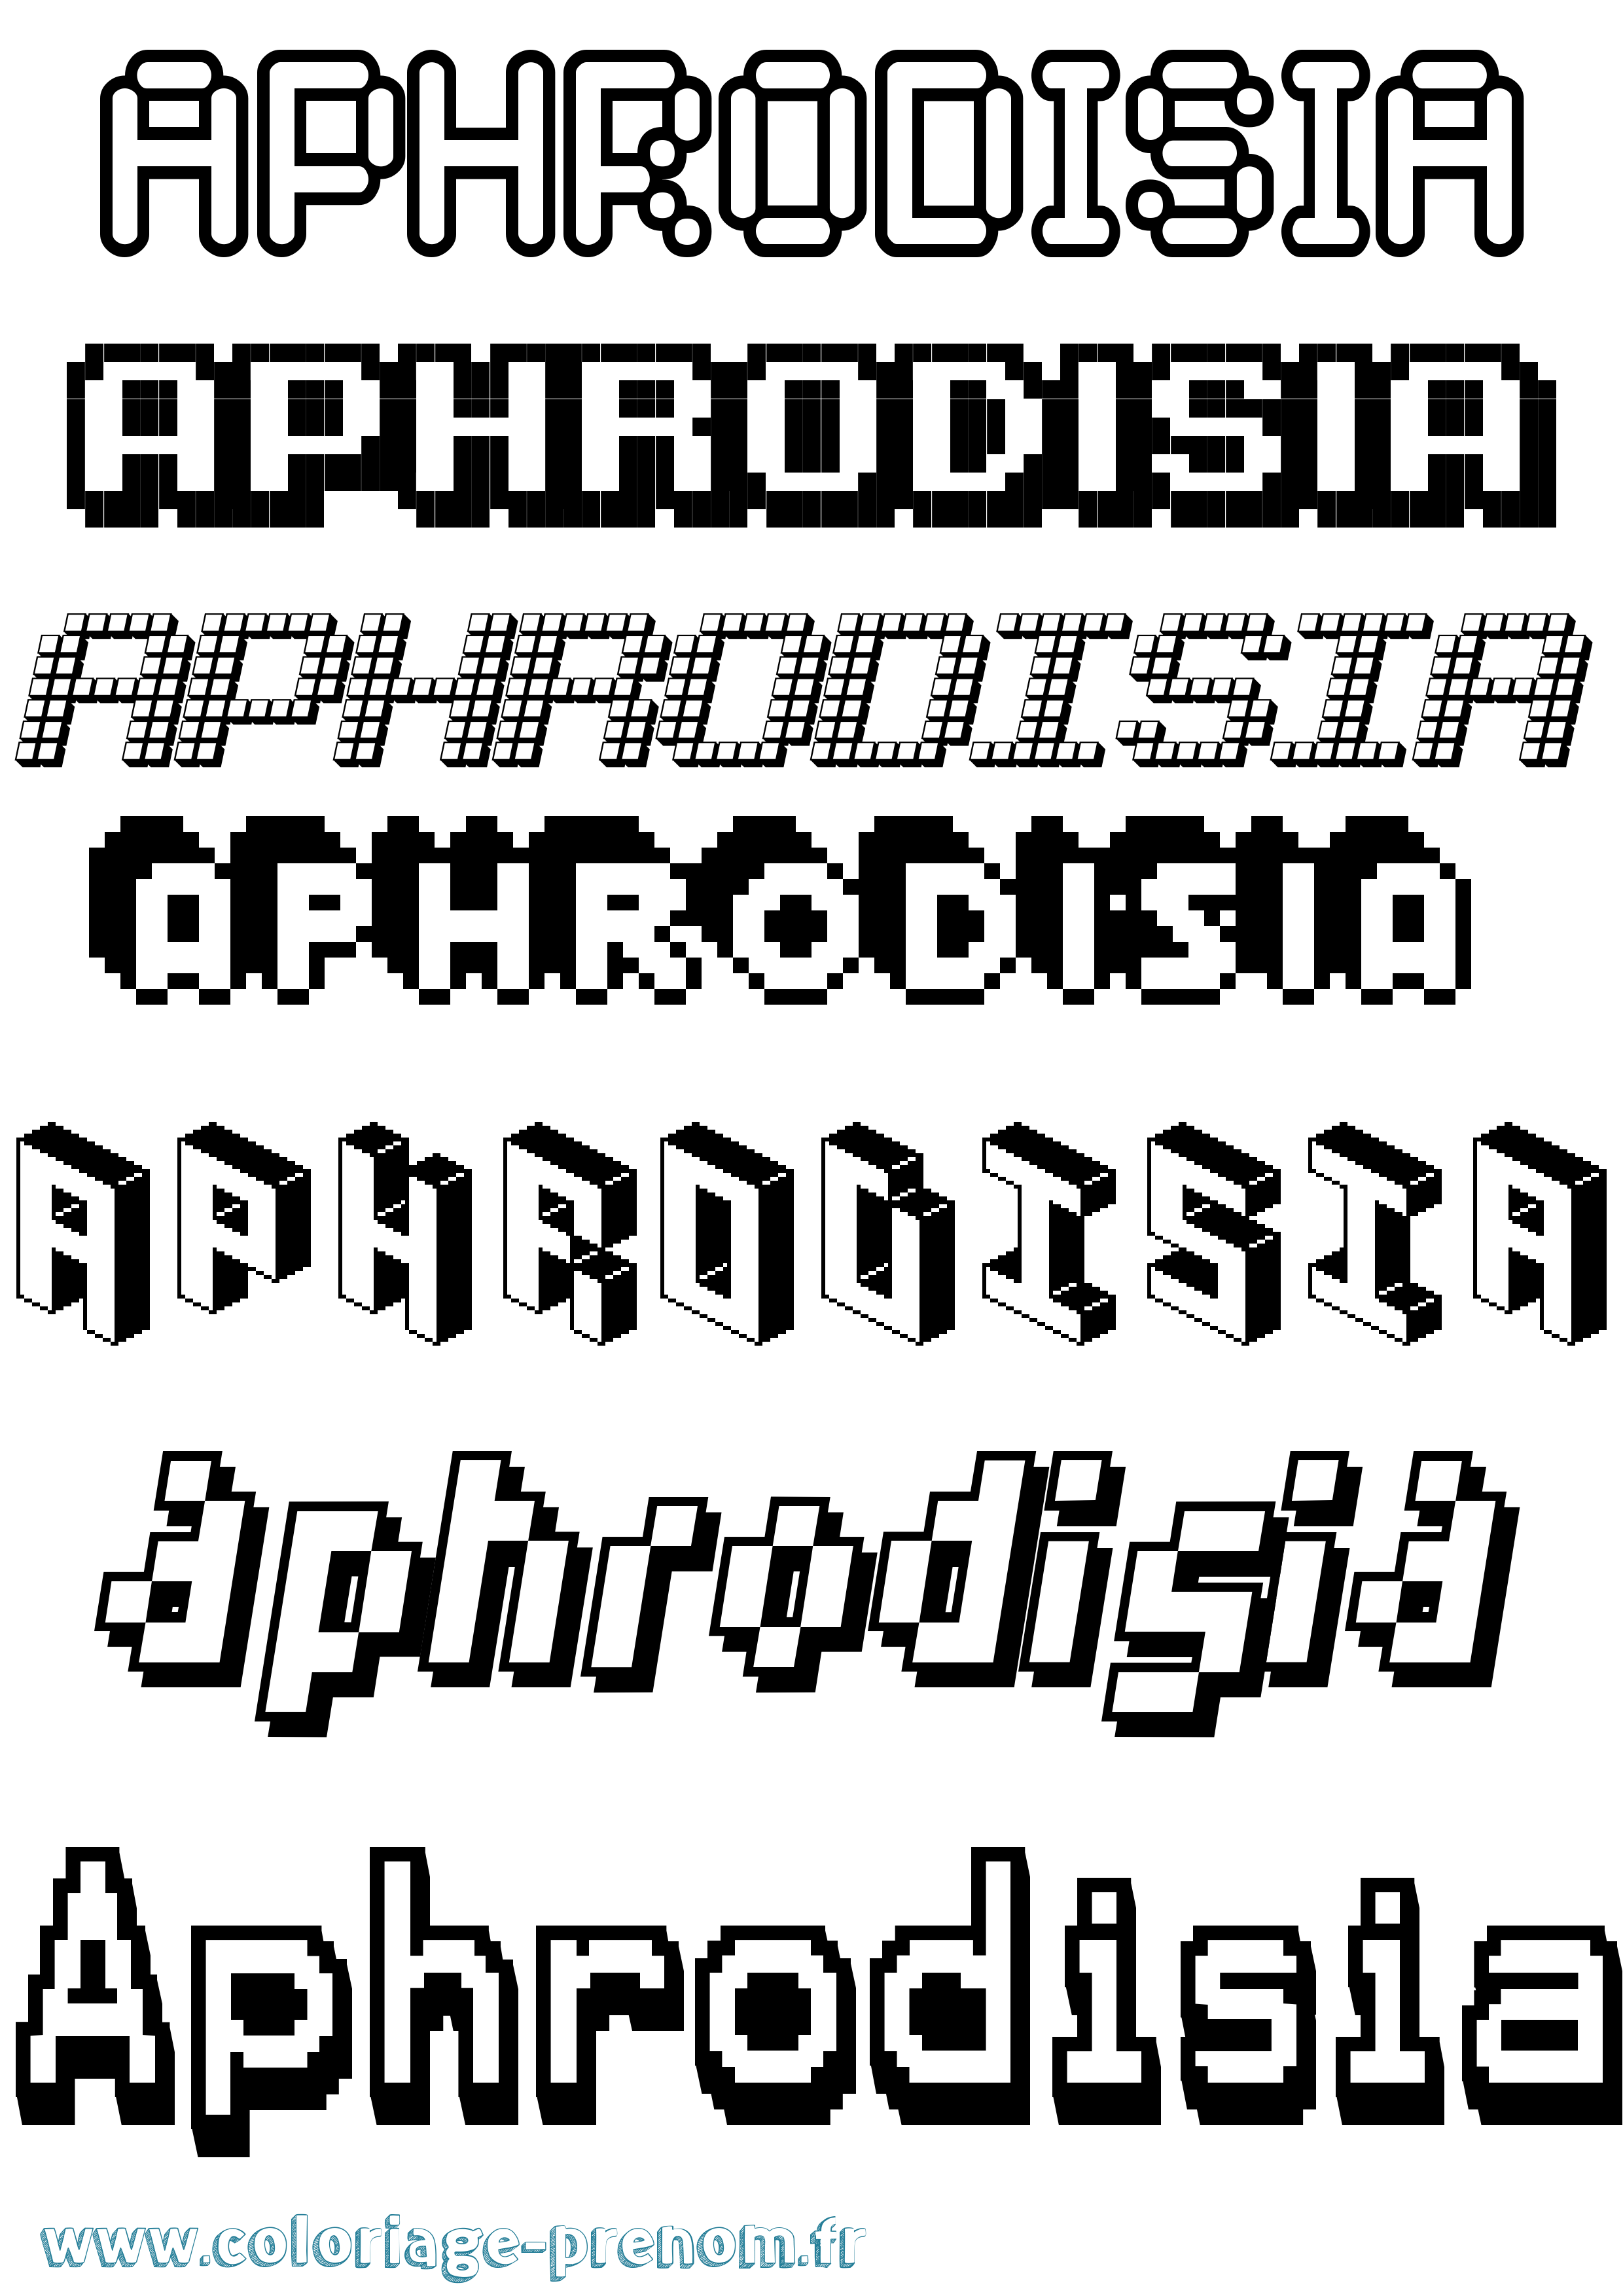 Coloriage prénom Aphrodisia Pixel